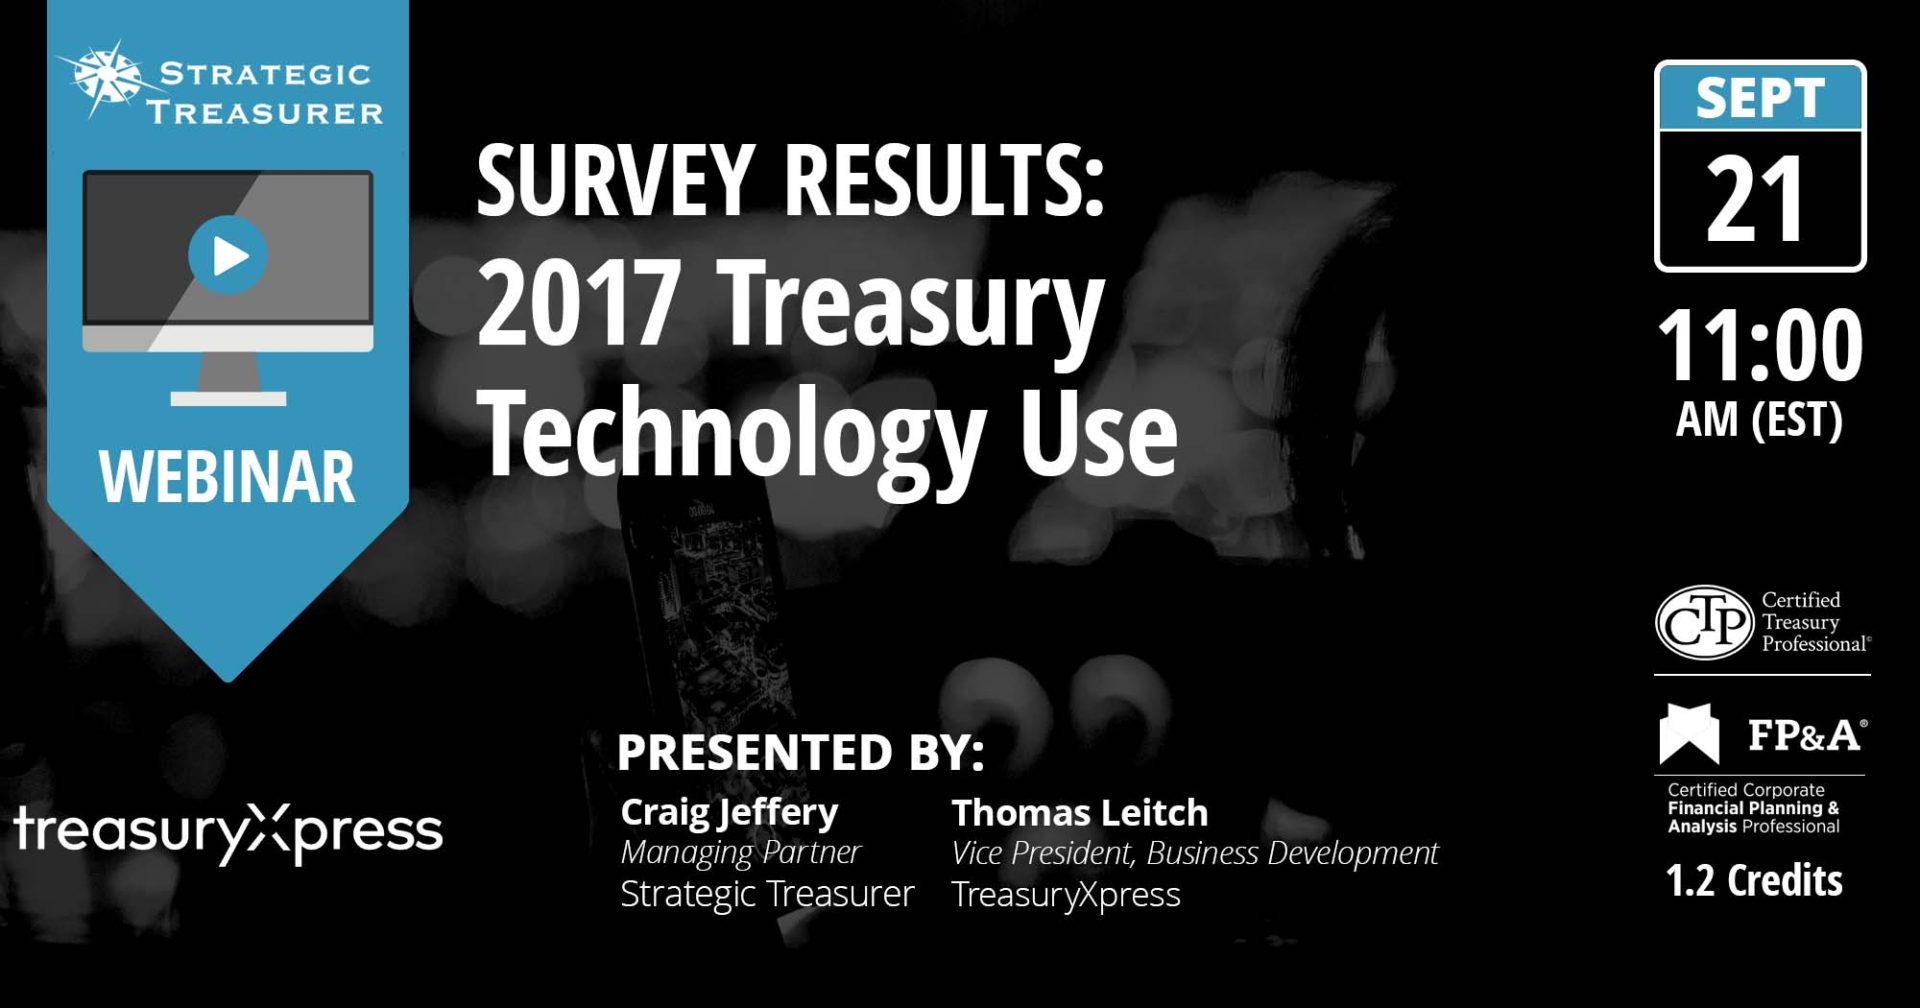 Webinar - Survey Result: 2017 Treasury Technology Use co-presented with TreasuryXpress